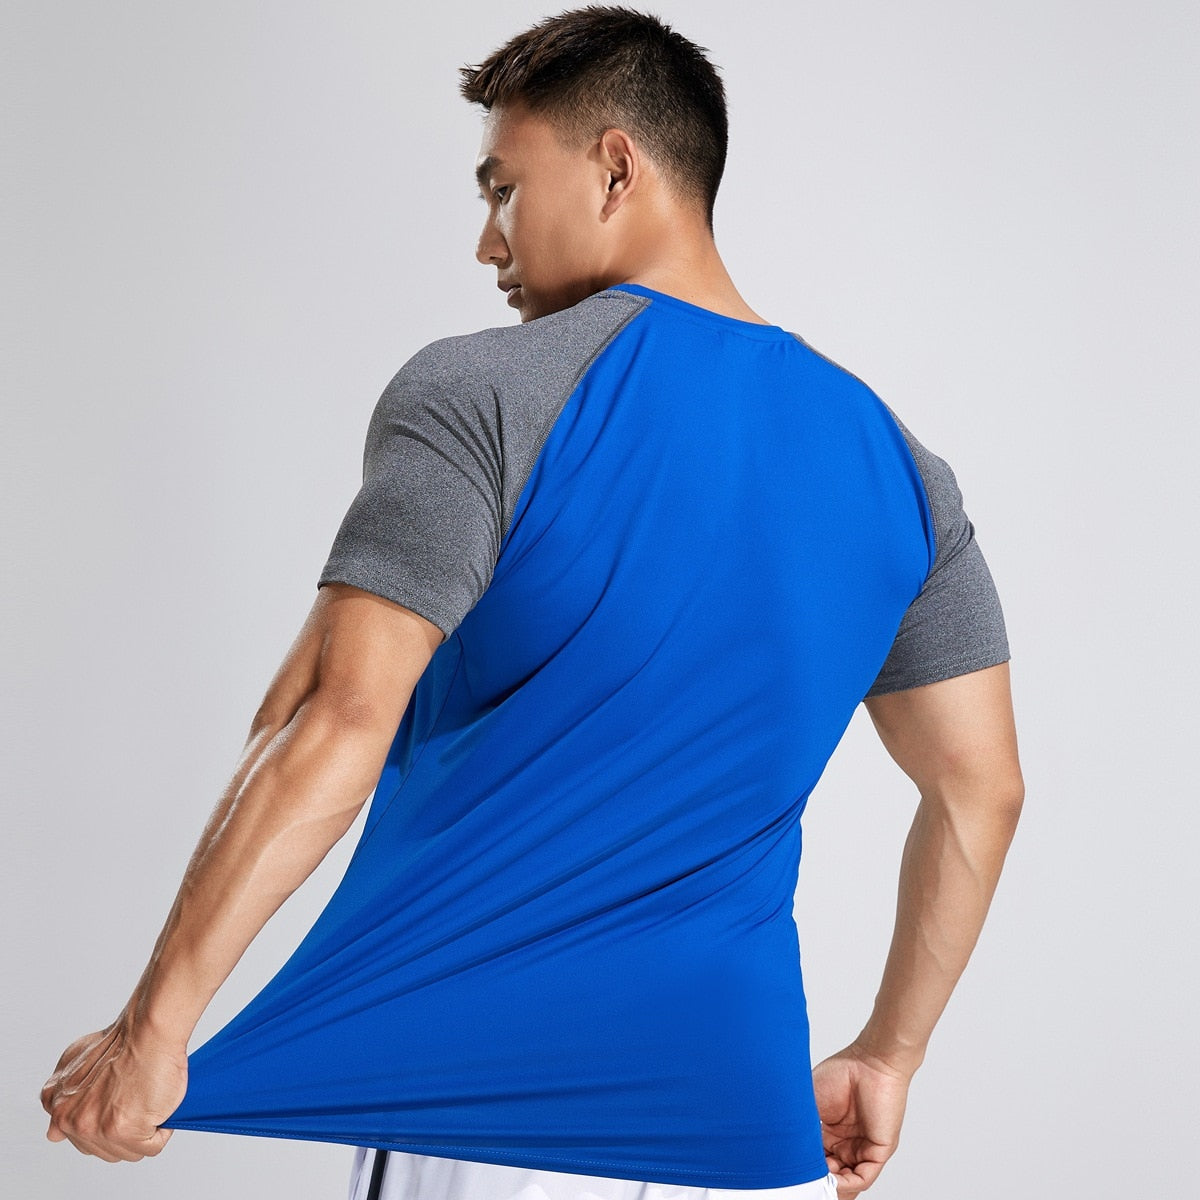 Summer Fitness Training T-shirt Men Short Sleeve Shirt Male Gym Bodybuilding Skinny Tees Tops Running Sport Quick Dry Clothing